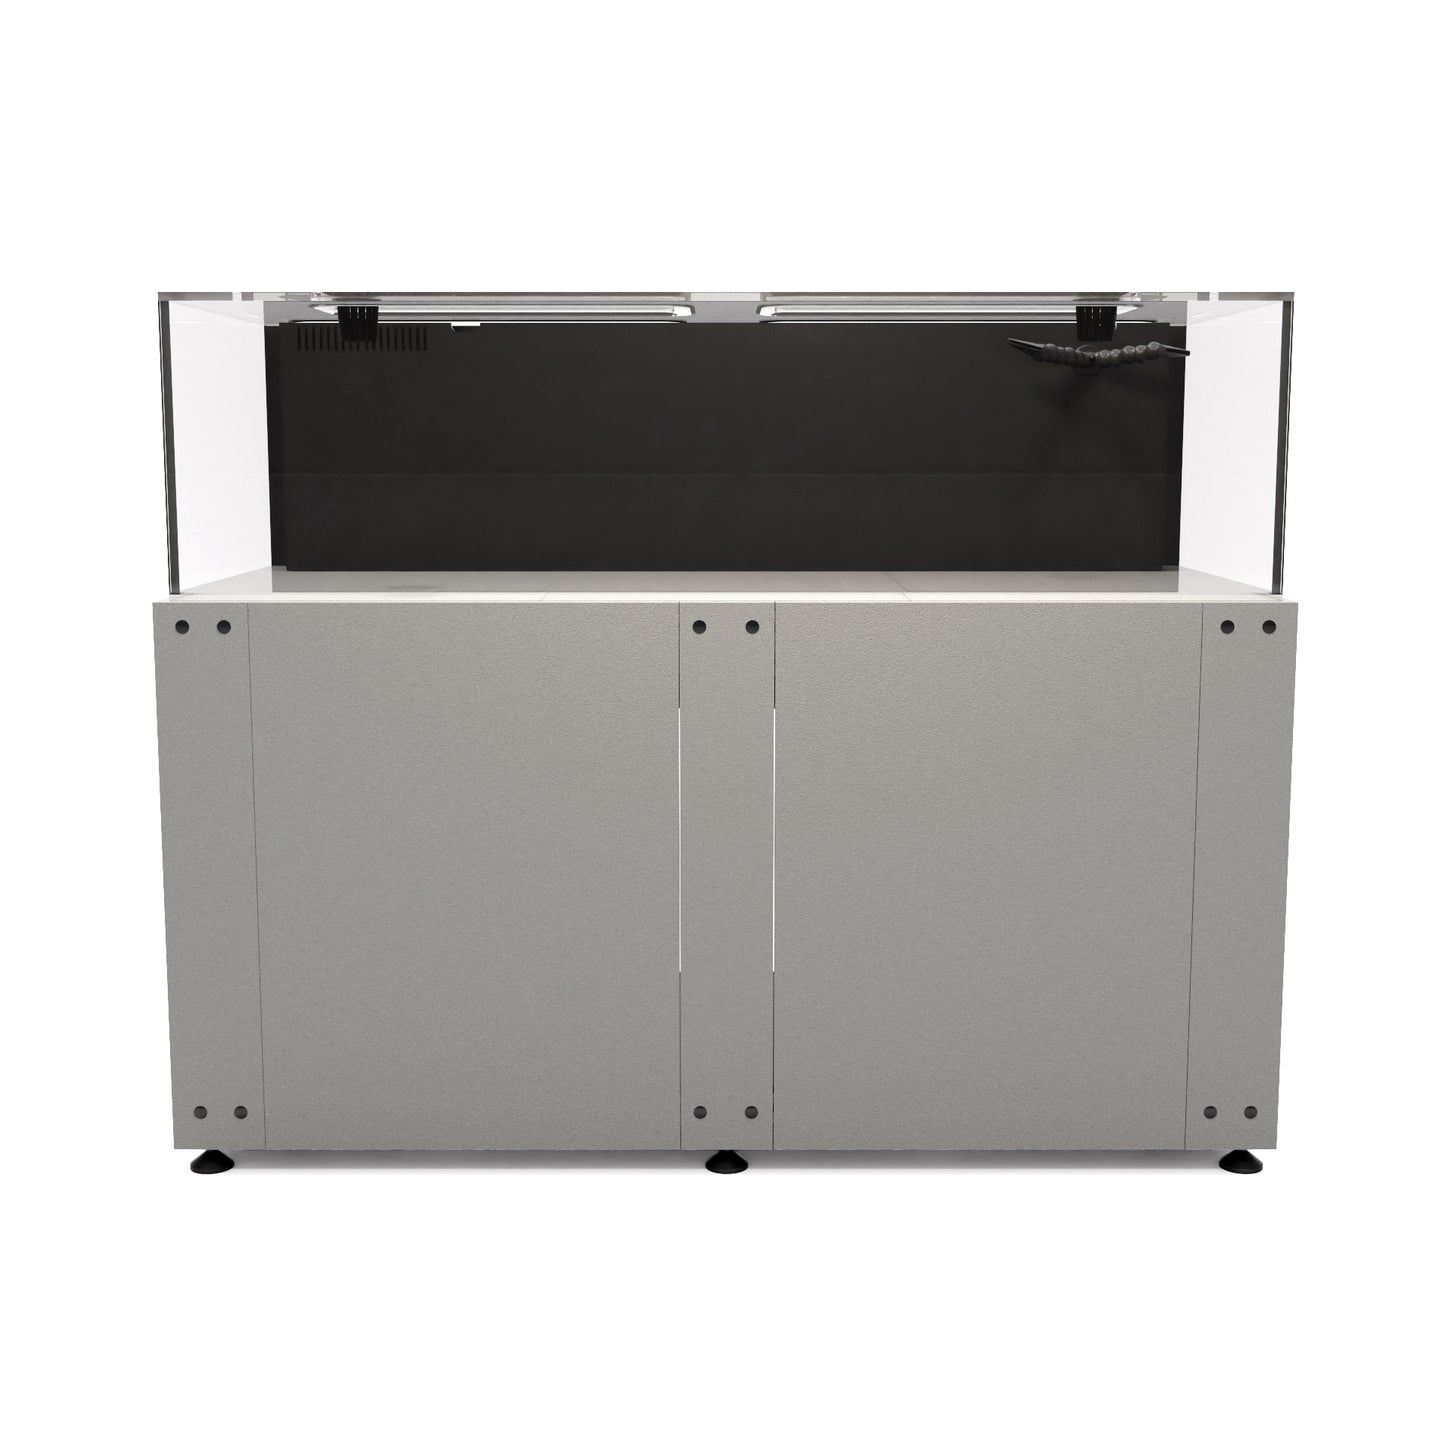 Tenecor Advantage® 100 Wet/Dry AIO Aquarium and Aluminum Stand Bundle 60x24x16